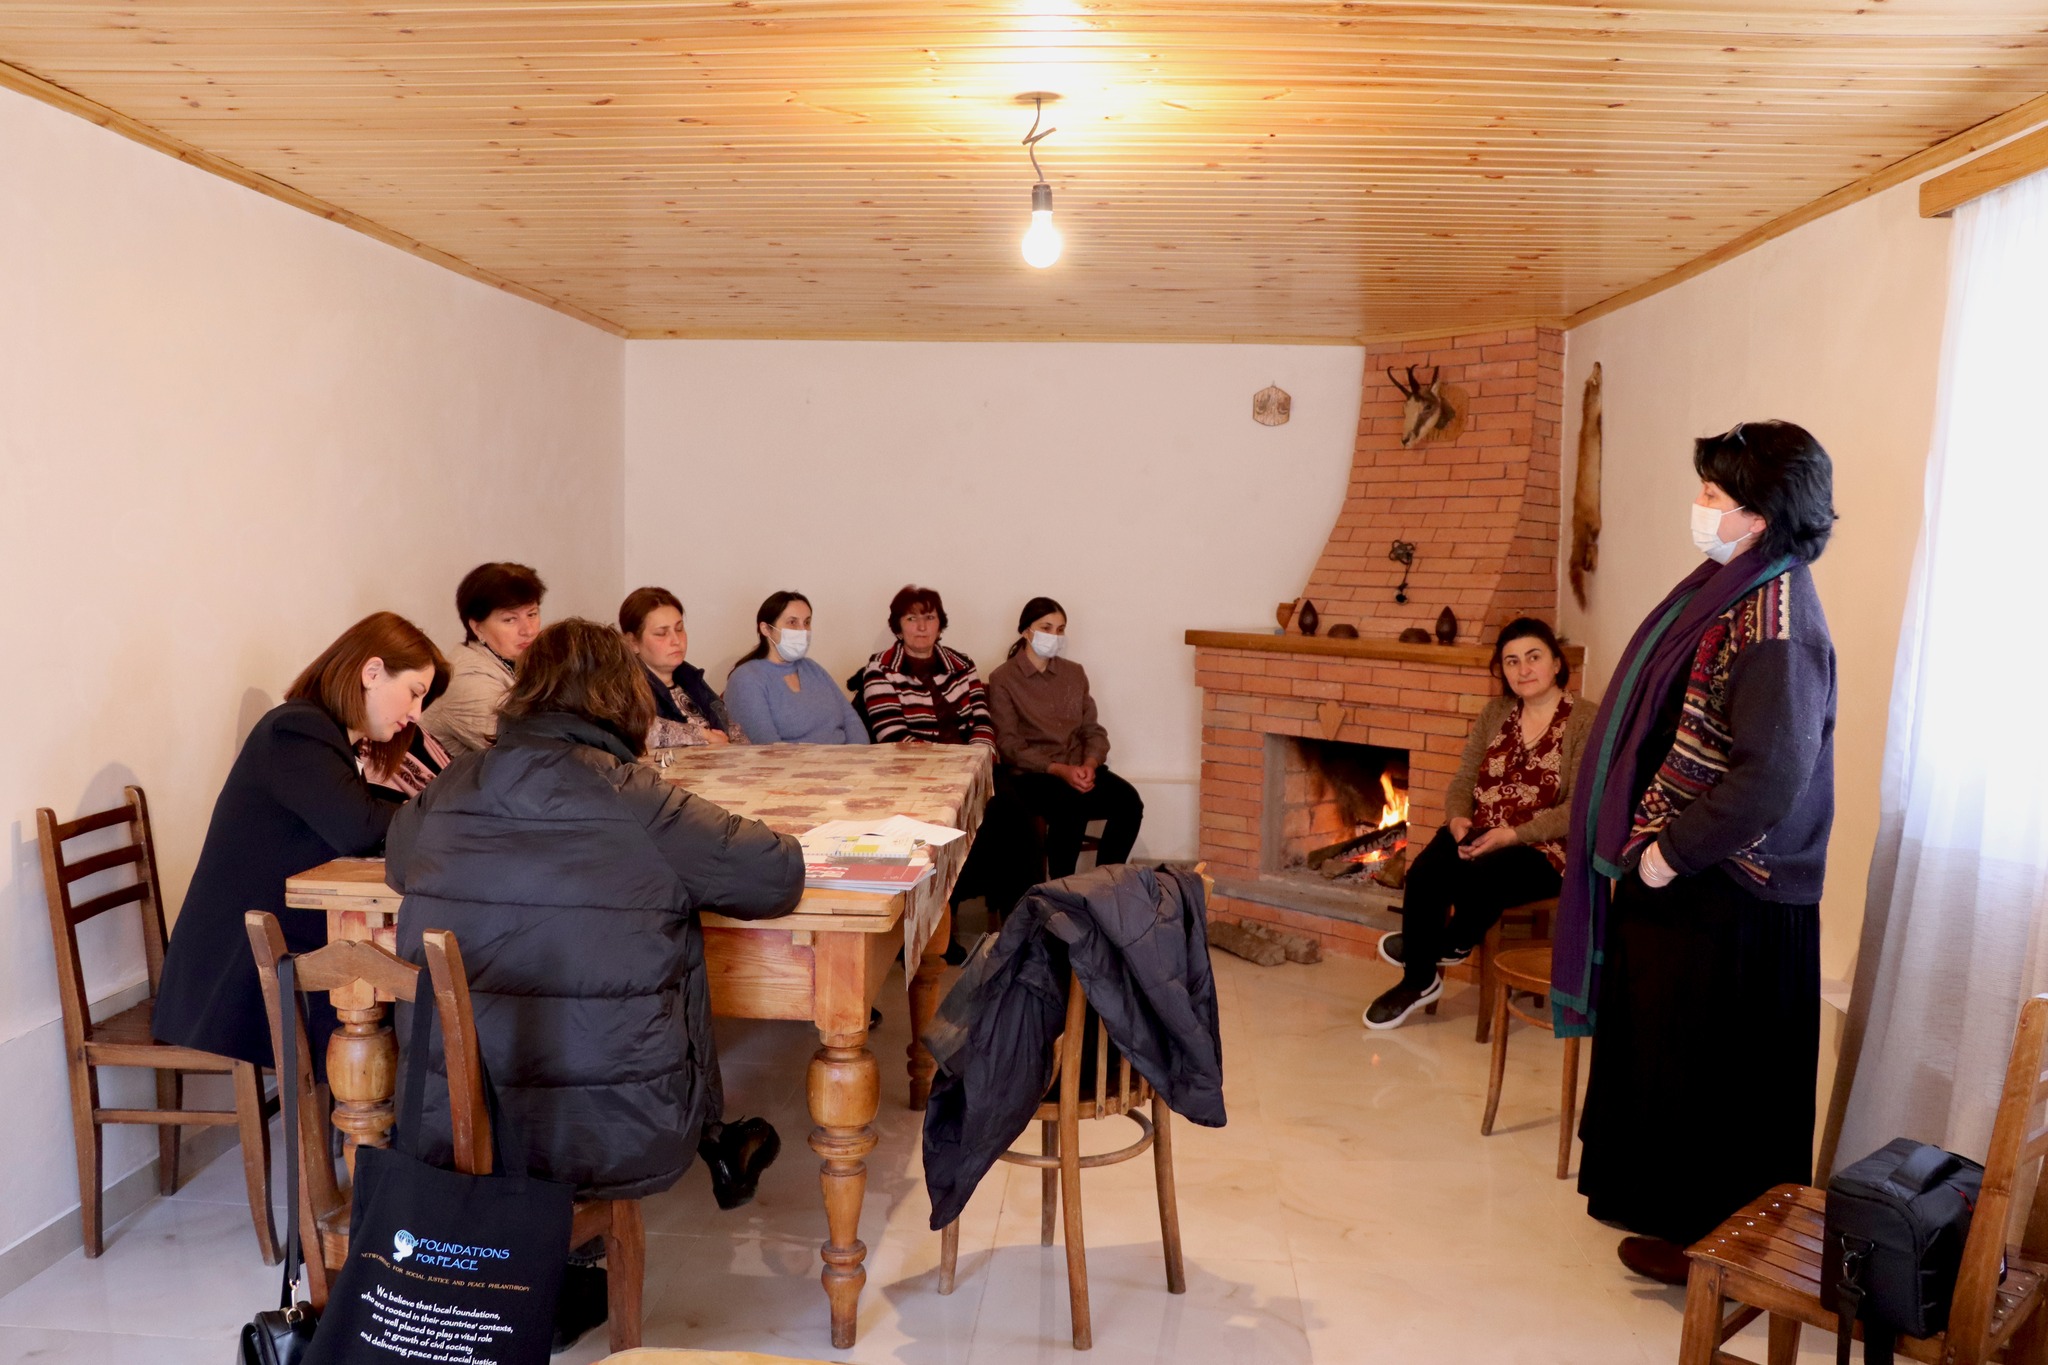 Taso Foundation visited village Utsera